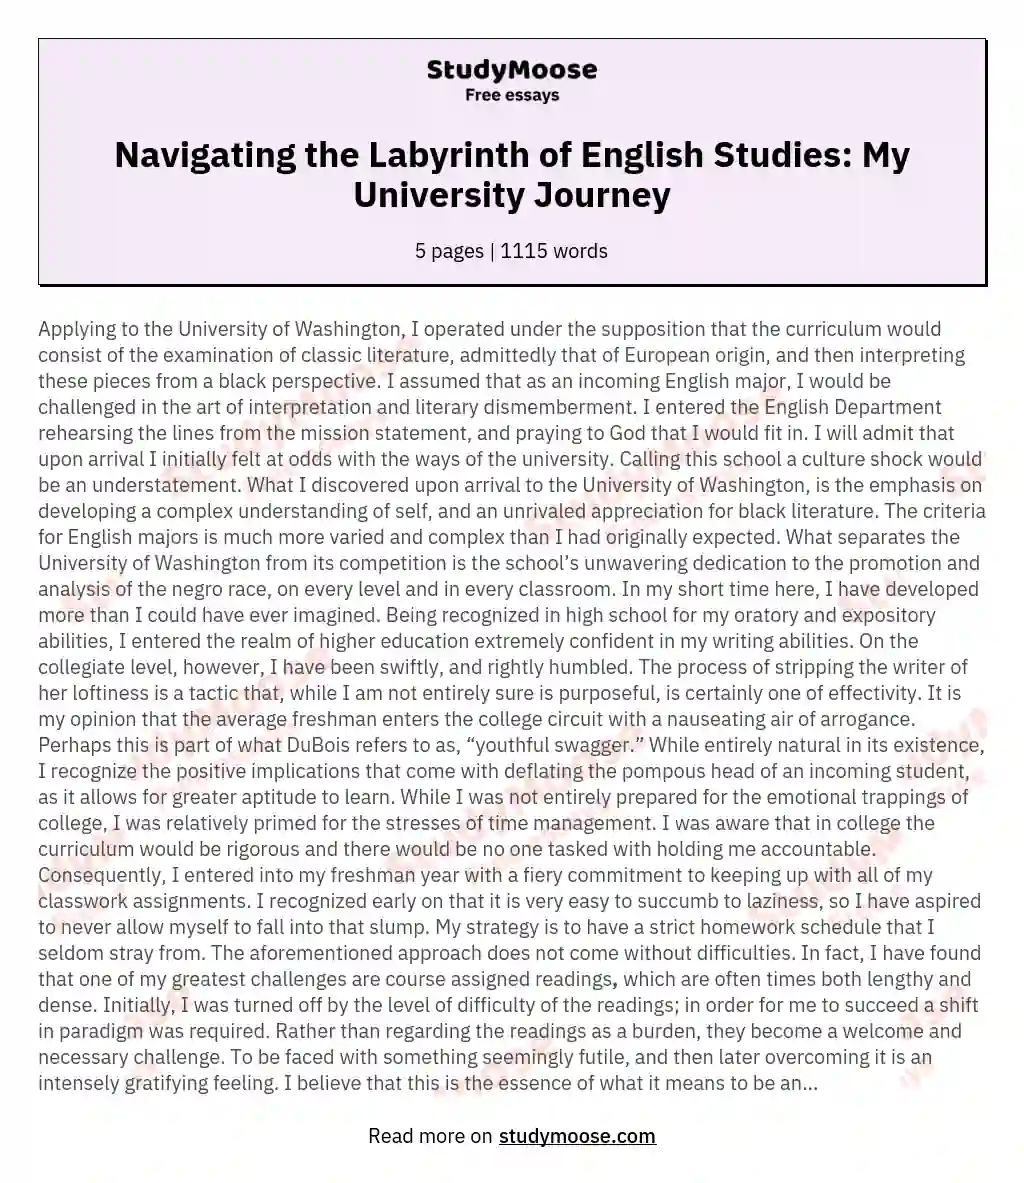 Navigating the Labyrinth of English Studies: My University Journey essay